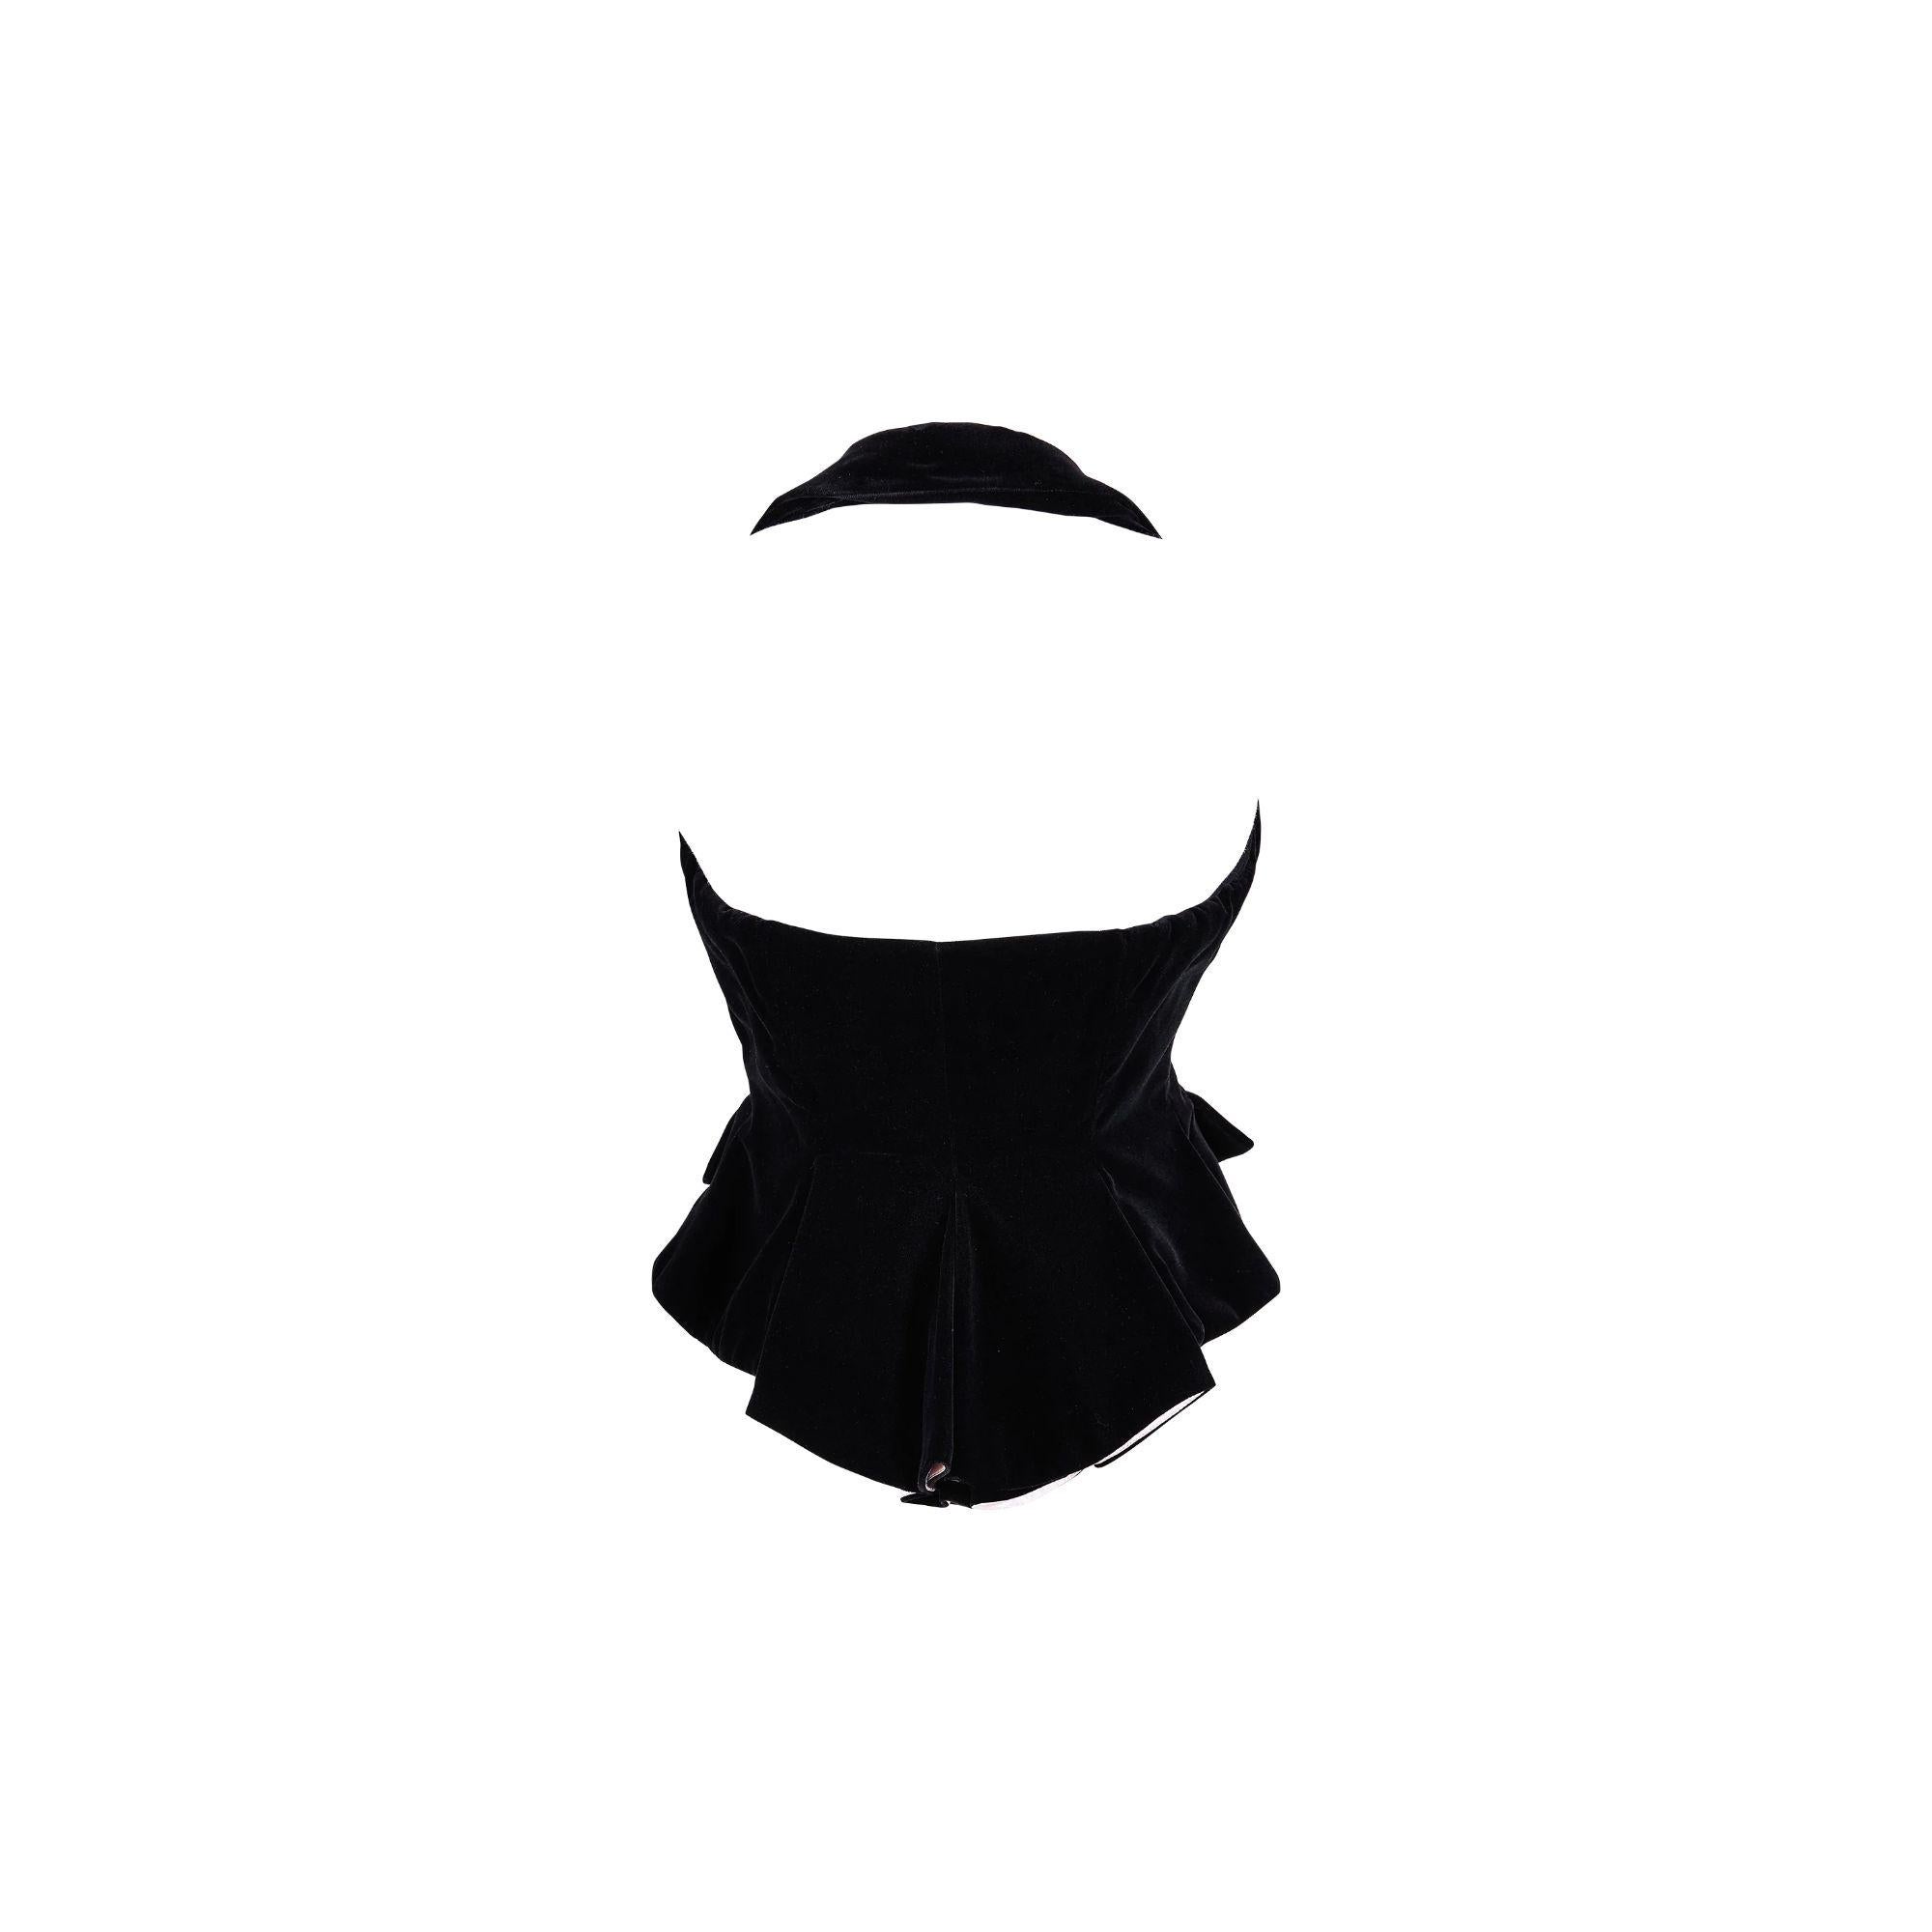 S/S 1995 Vivienne Westwood 'Erotic Zones' Collection Velvet Skirt 3